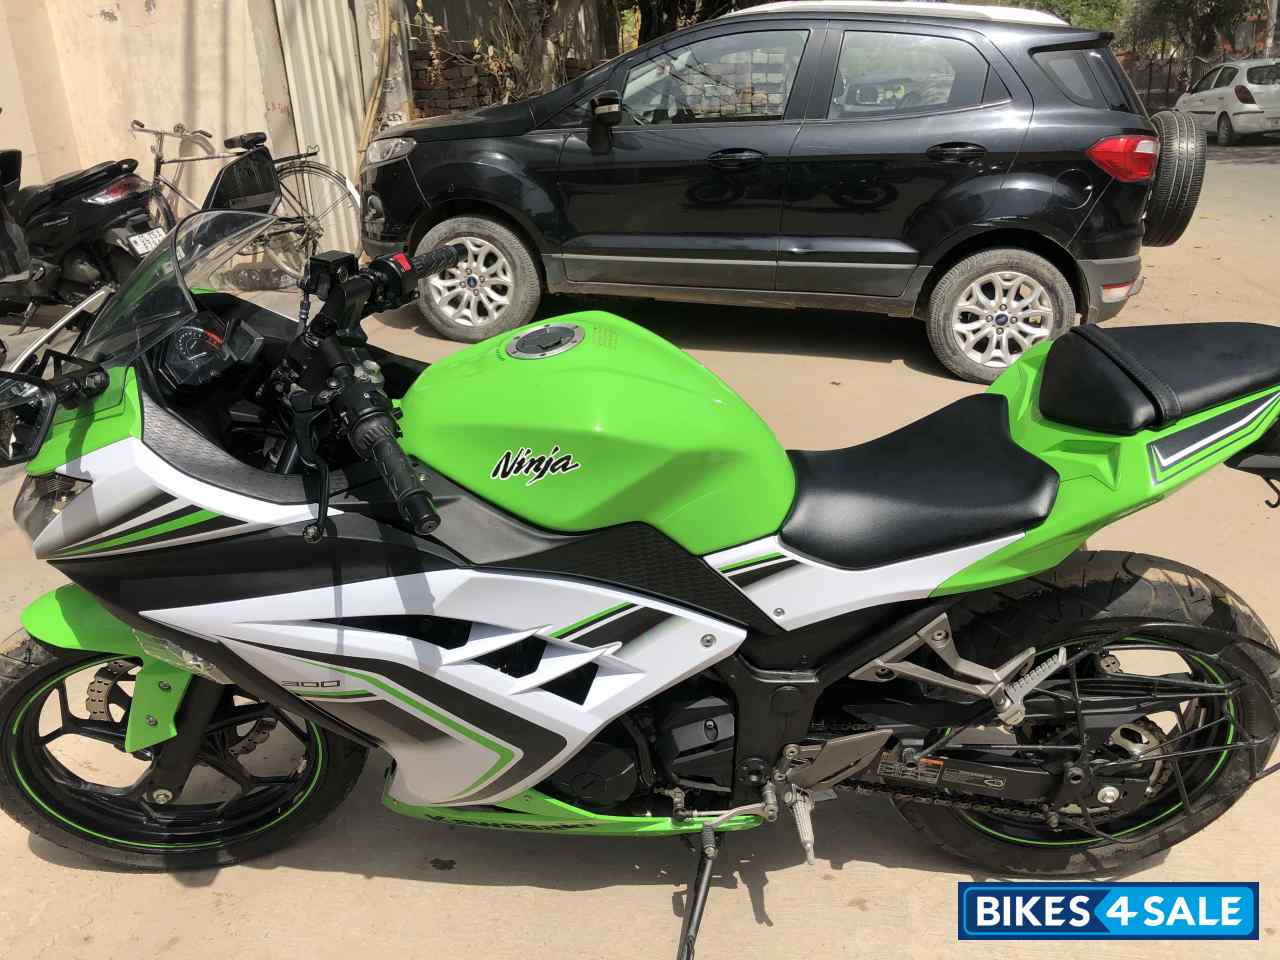 Used 2016 model Kawasaki Ninja 300R for sale New Delhi. ID 330900. Green & White colour - Bikes4Sale